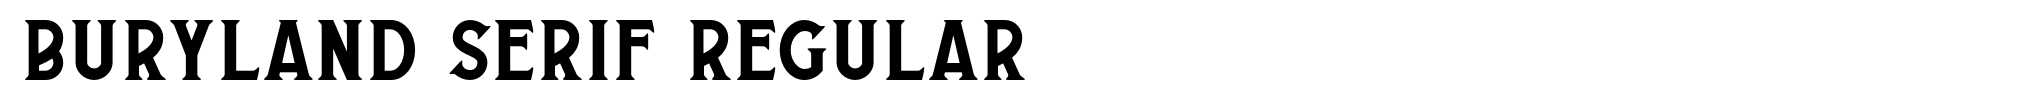 Buryland Serif Regular image